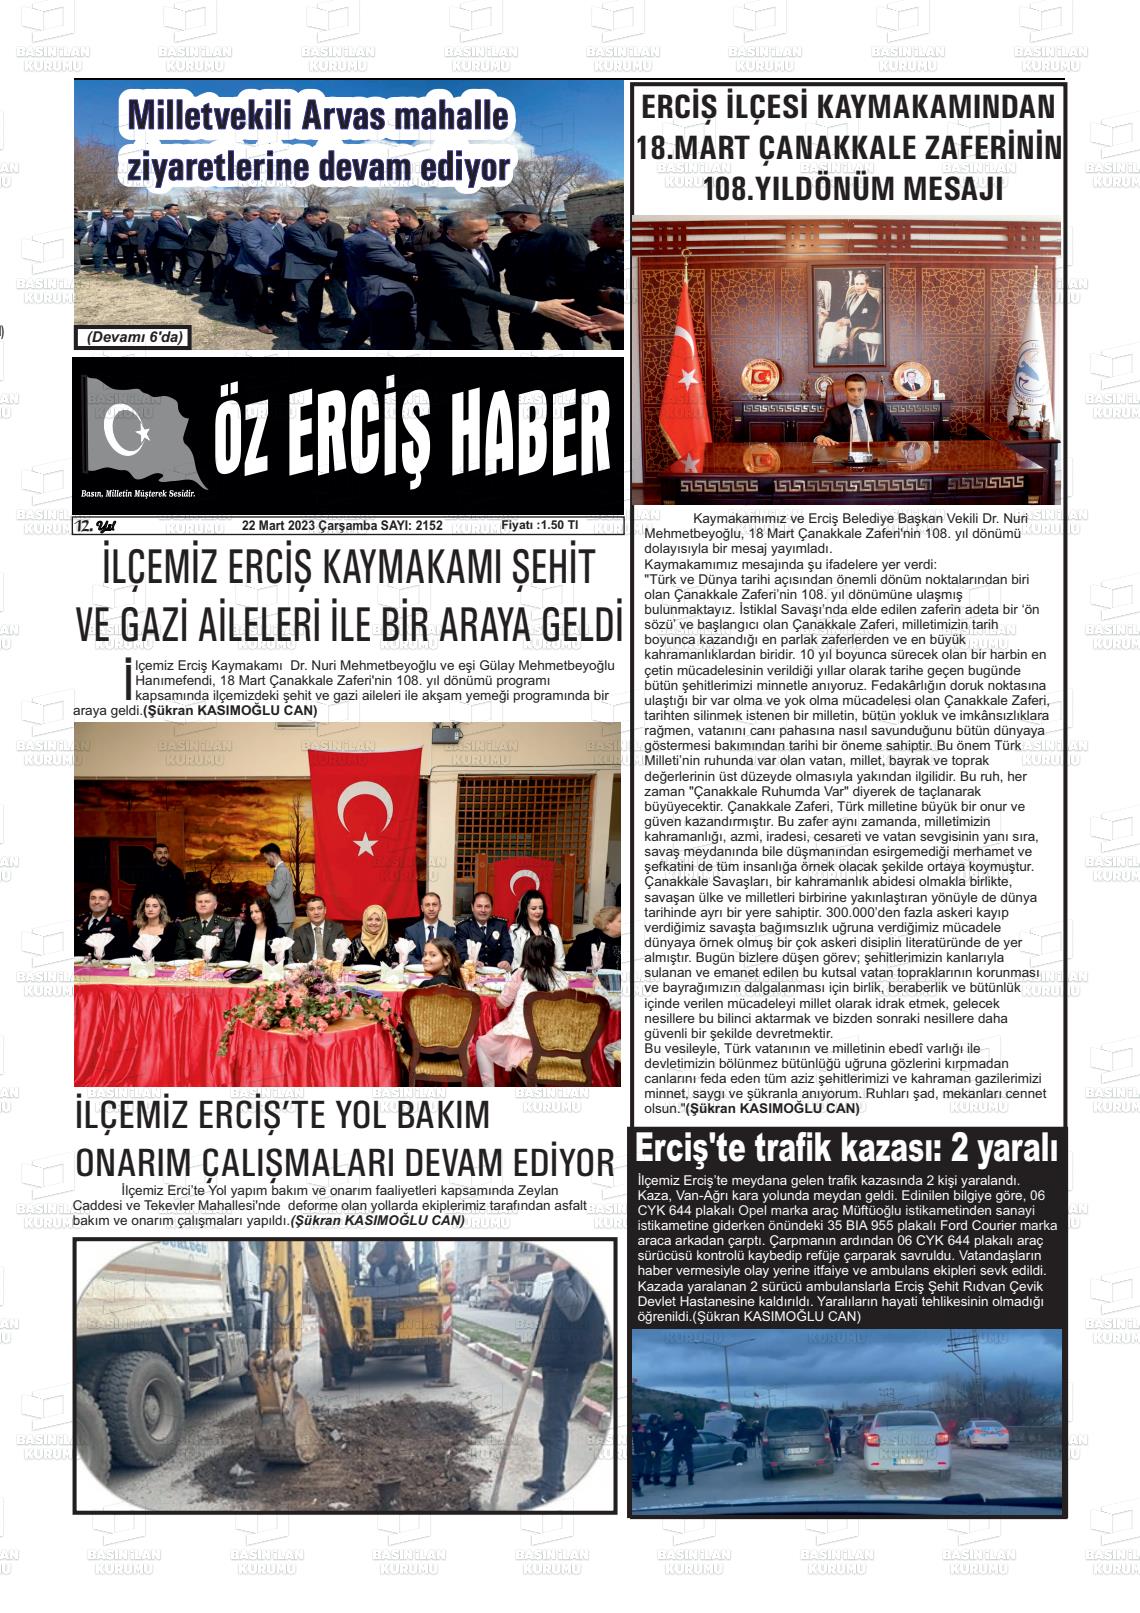 22 Mart 2023 Öz Erciş Haber Gazete Manşeti